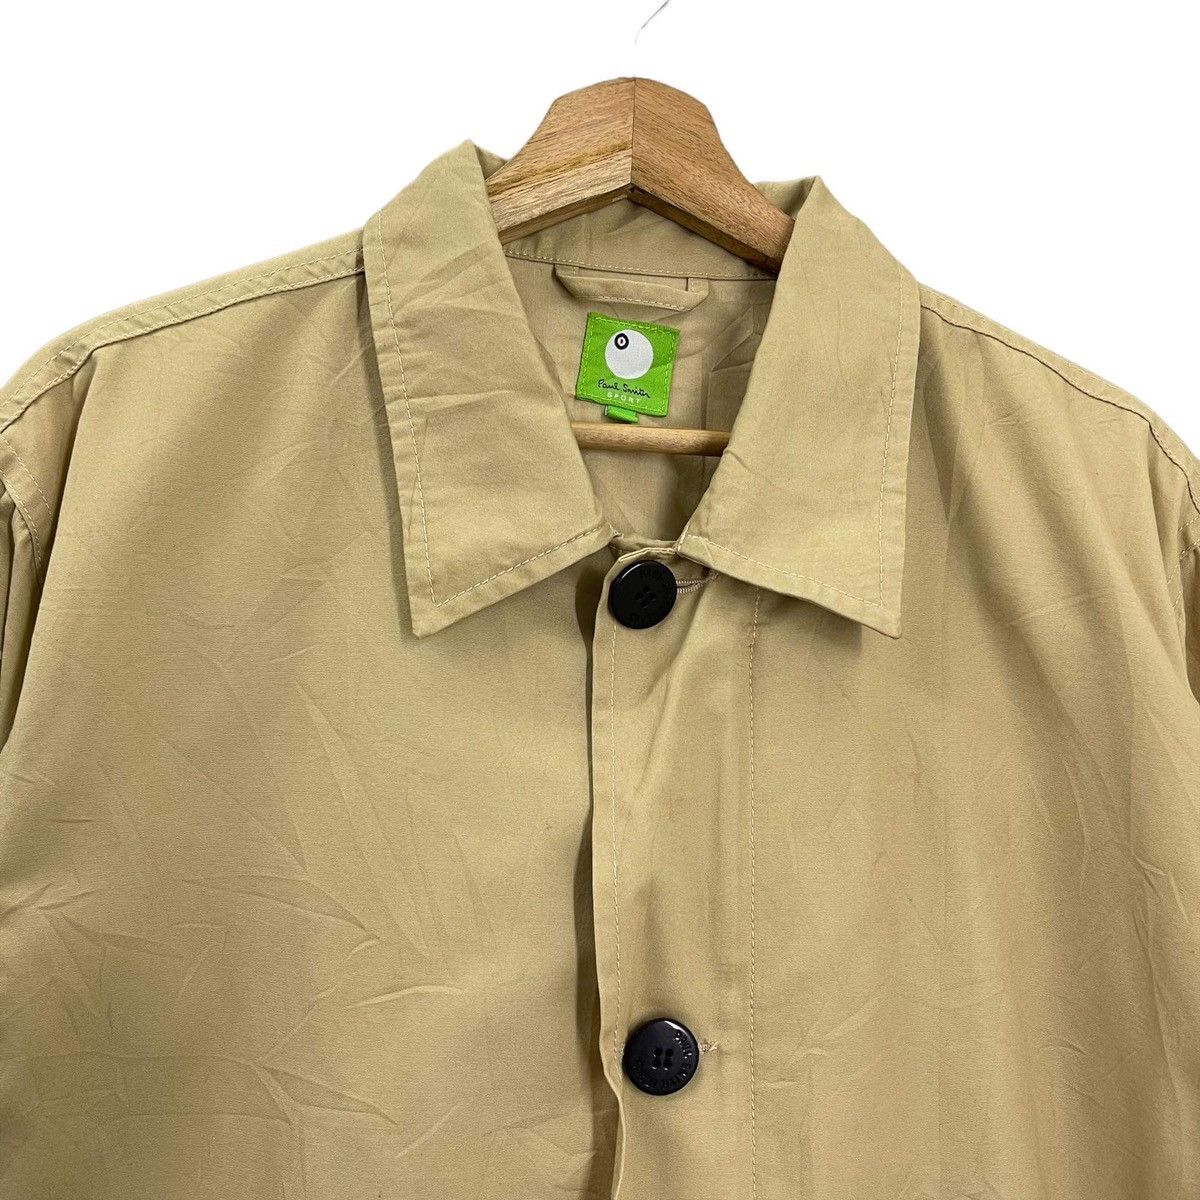 Paul Smith Button Jacket Size M - 4